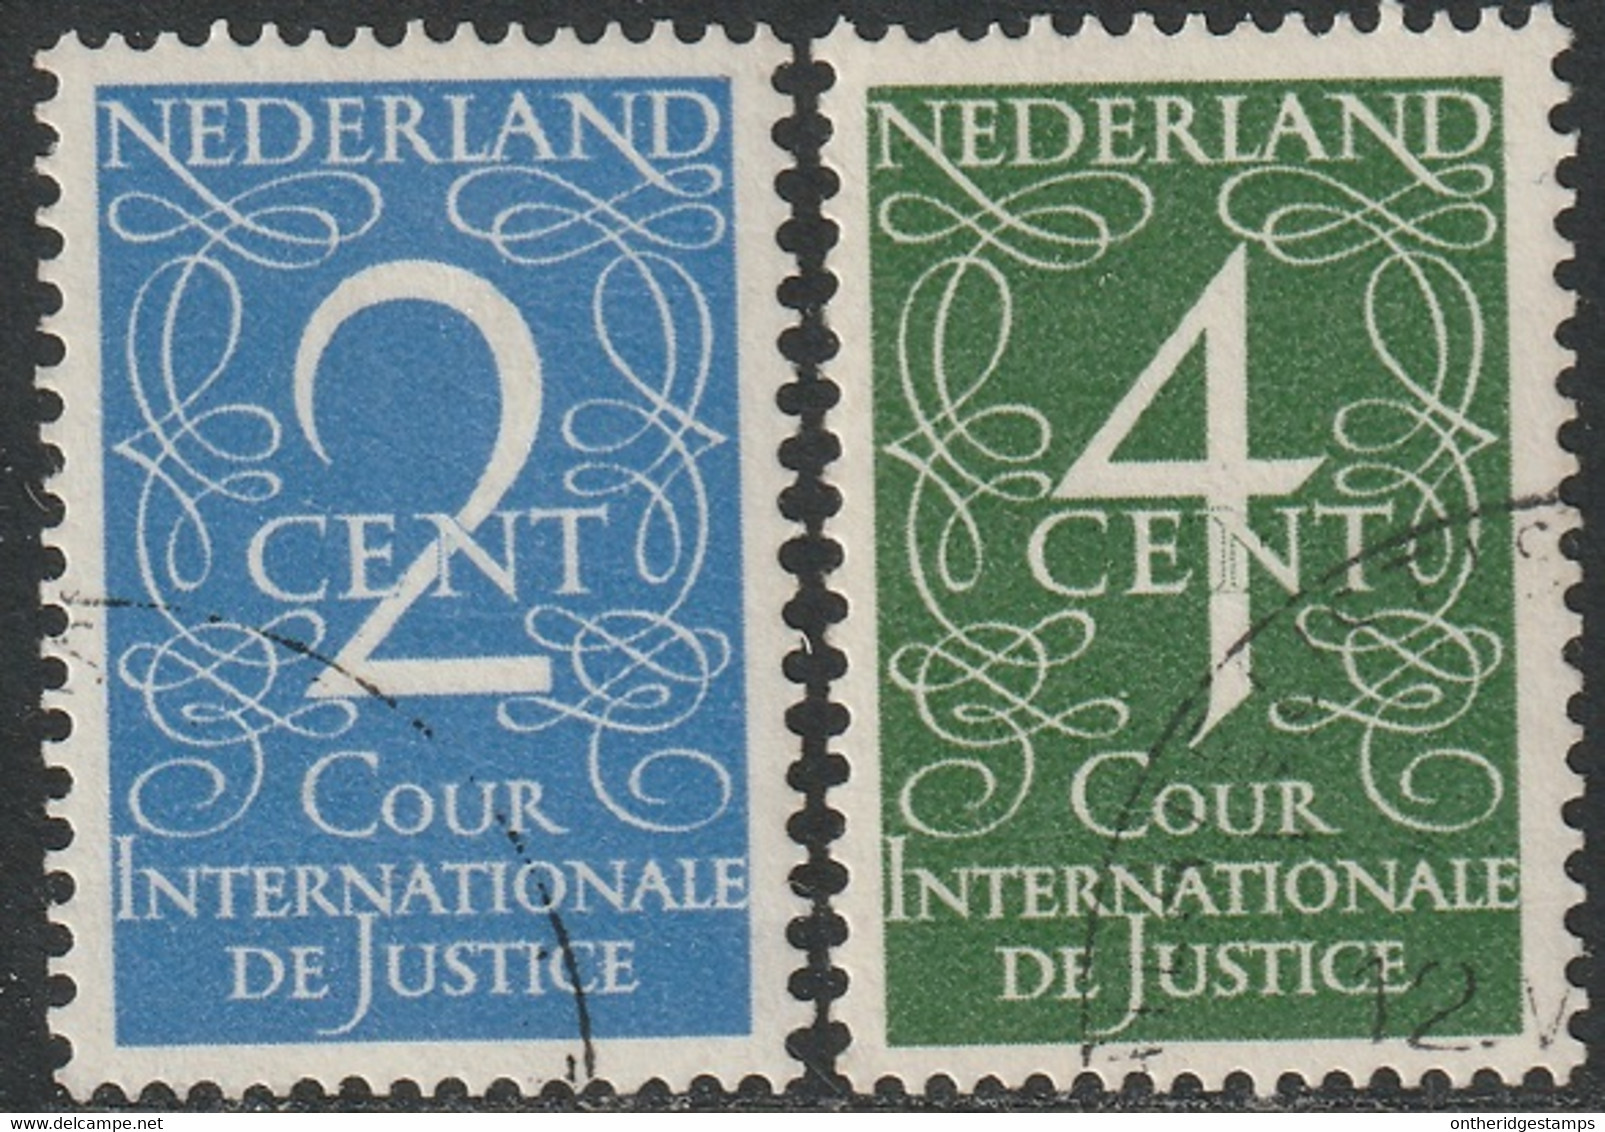 Netherlands 1950 Sc O25-6 NVPH D25-6 Official Set CTO NH - Dienstmarken